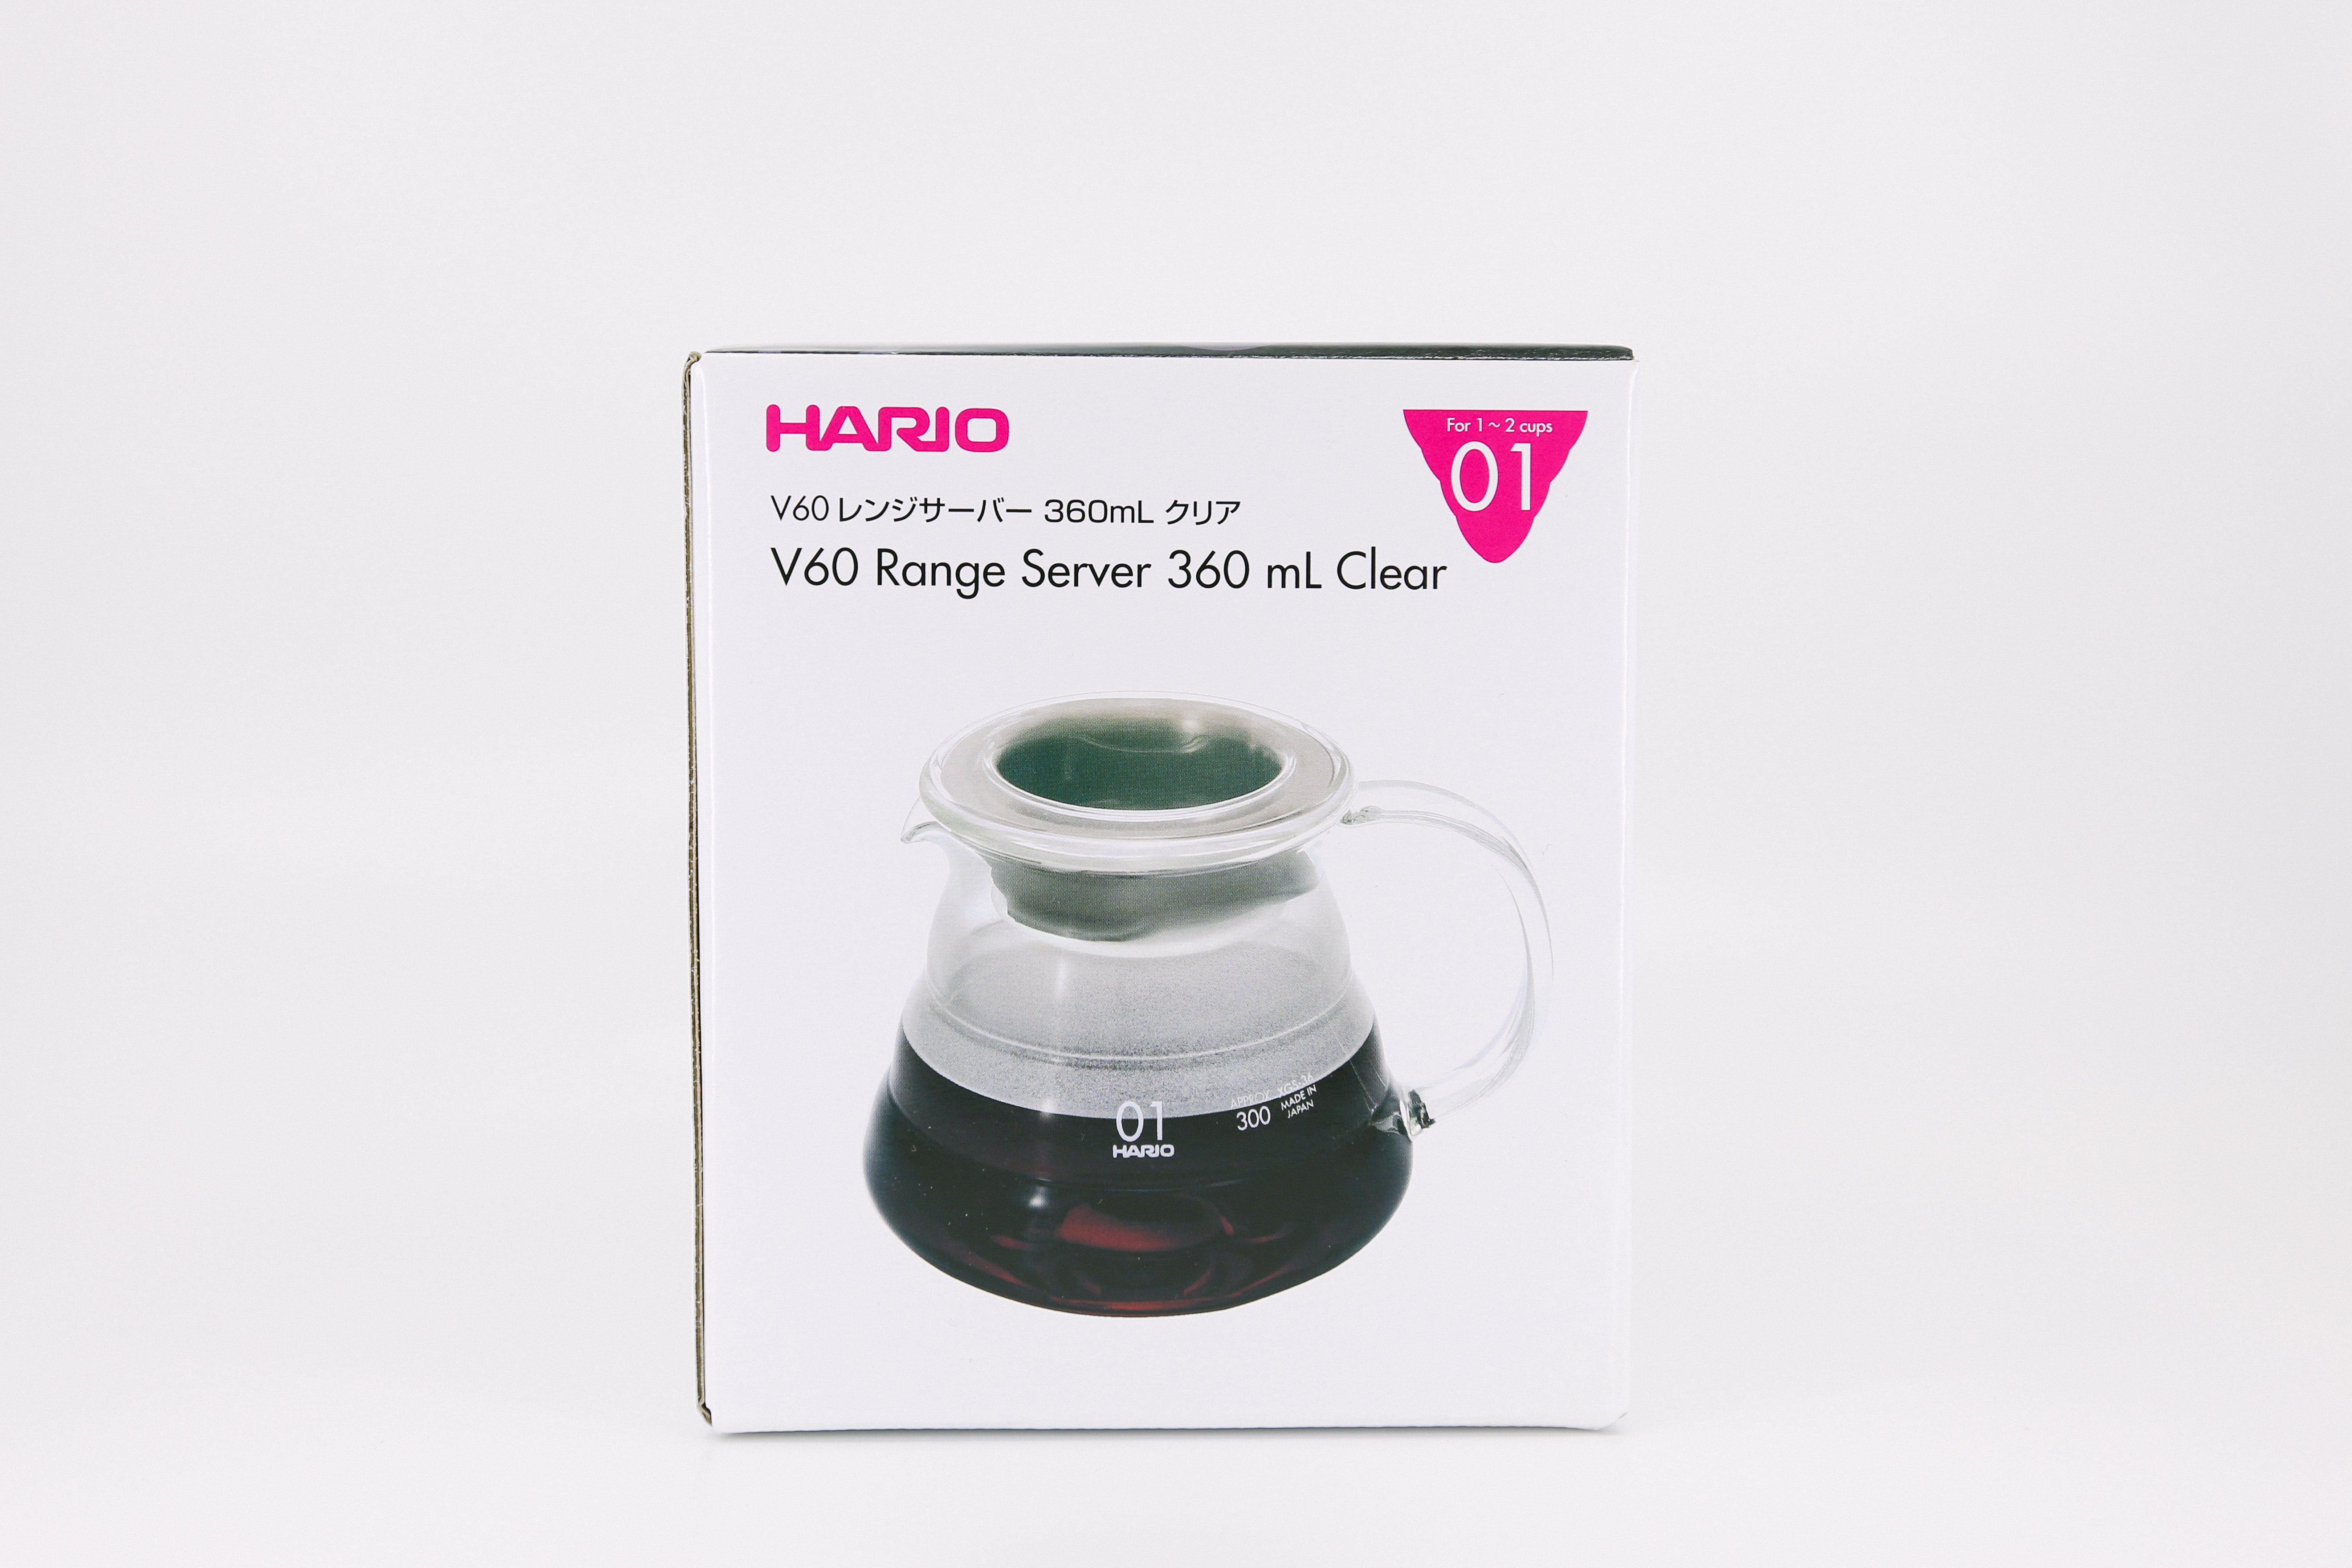 Hario V60 Clear Server 01